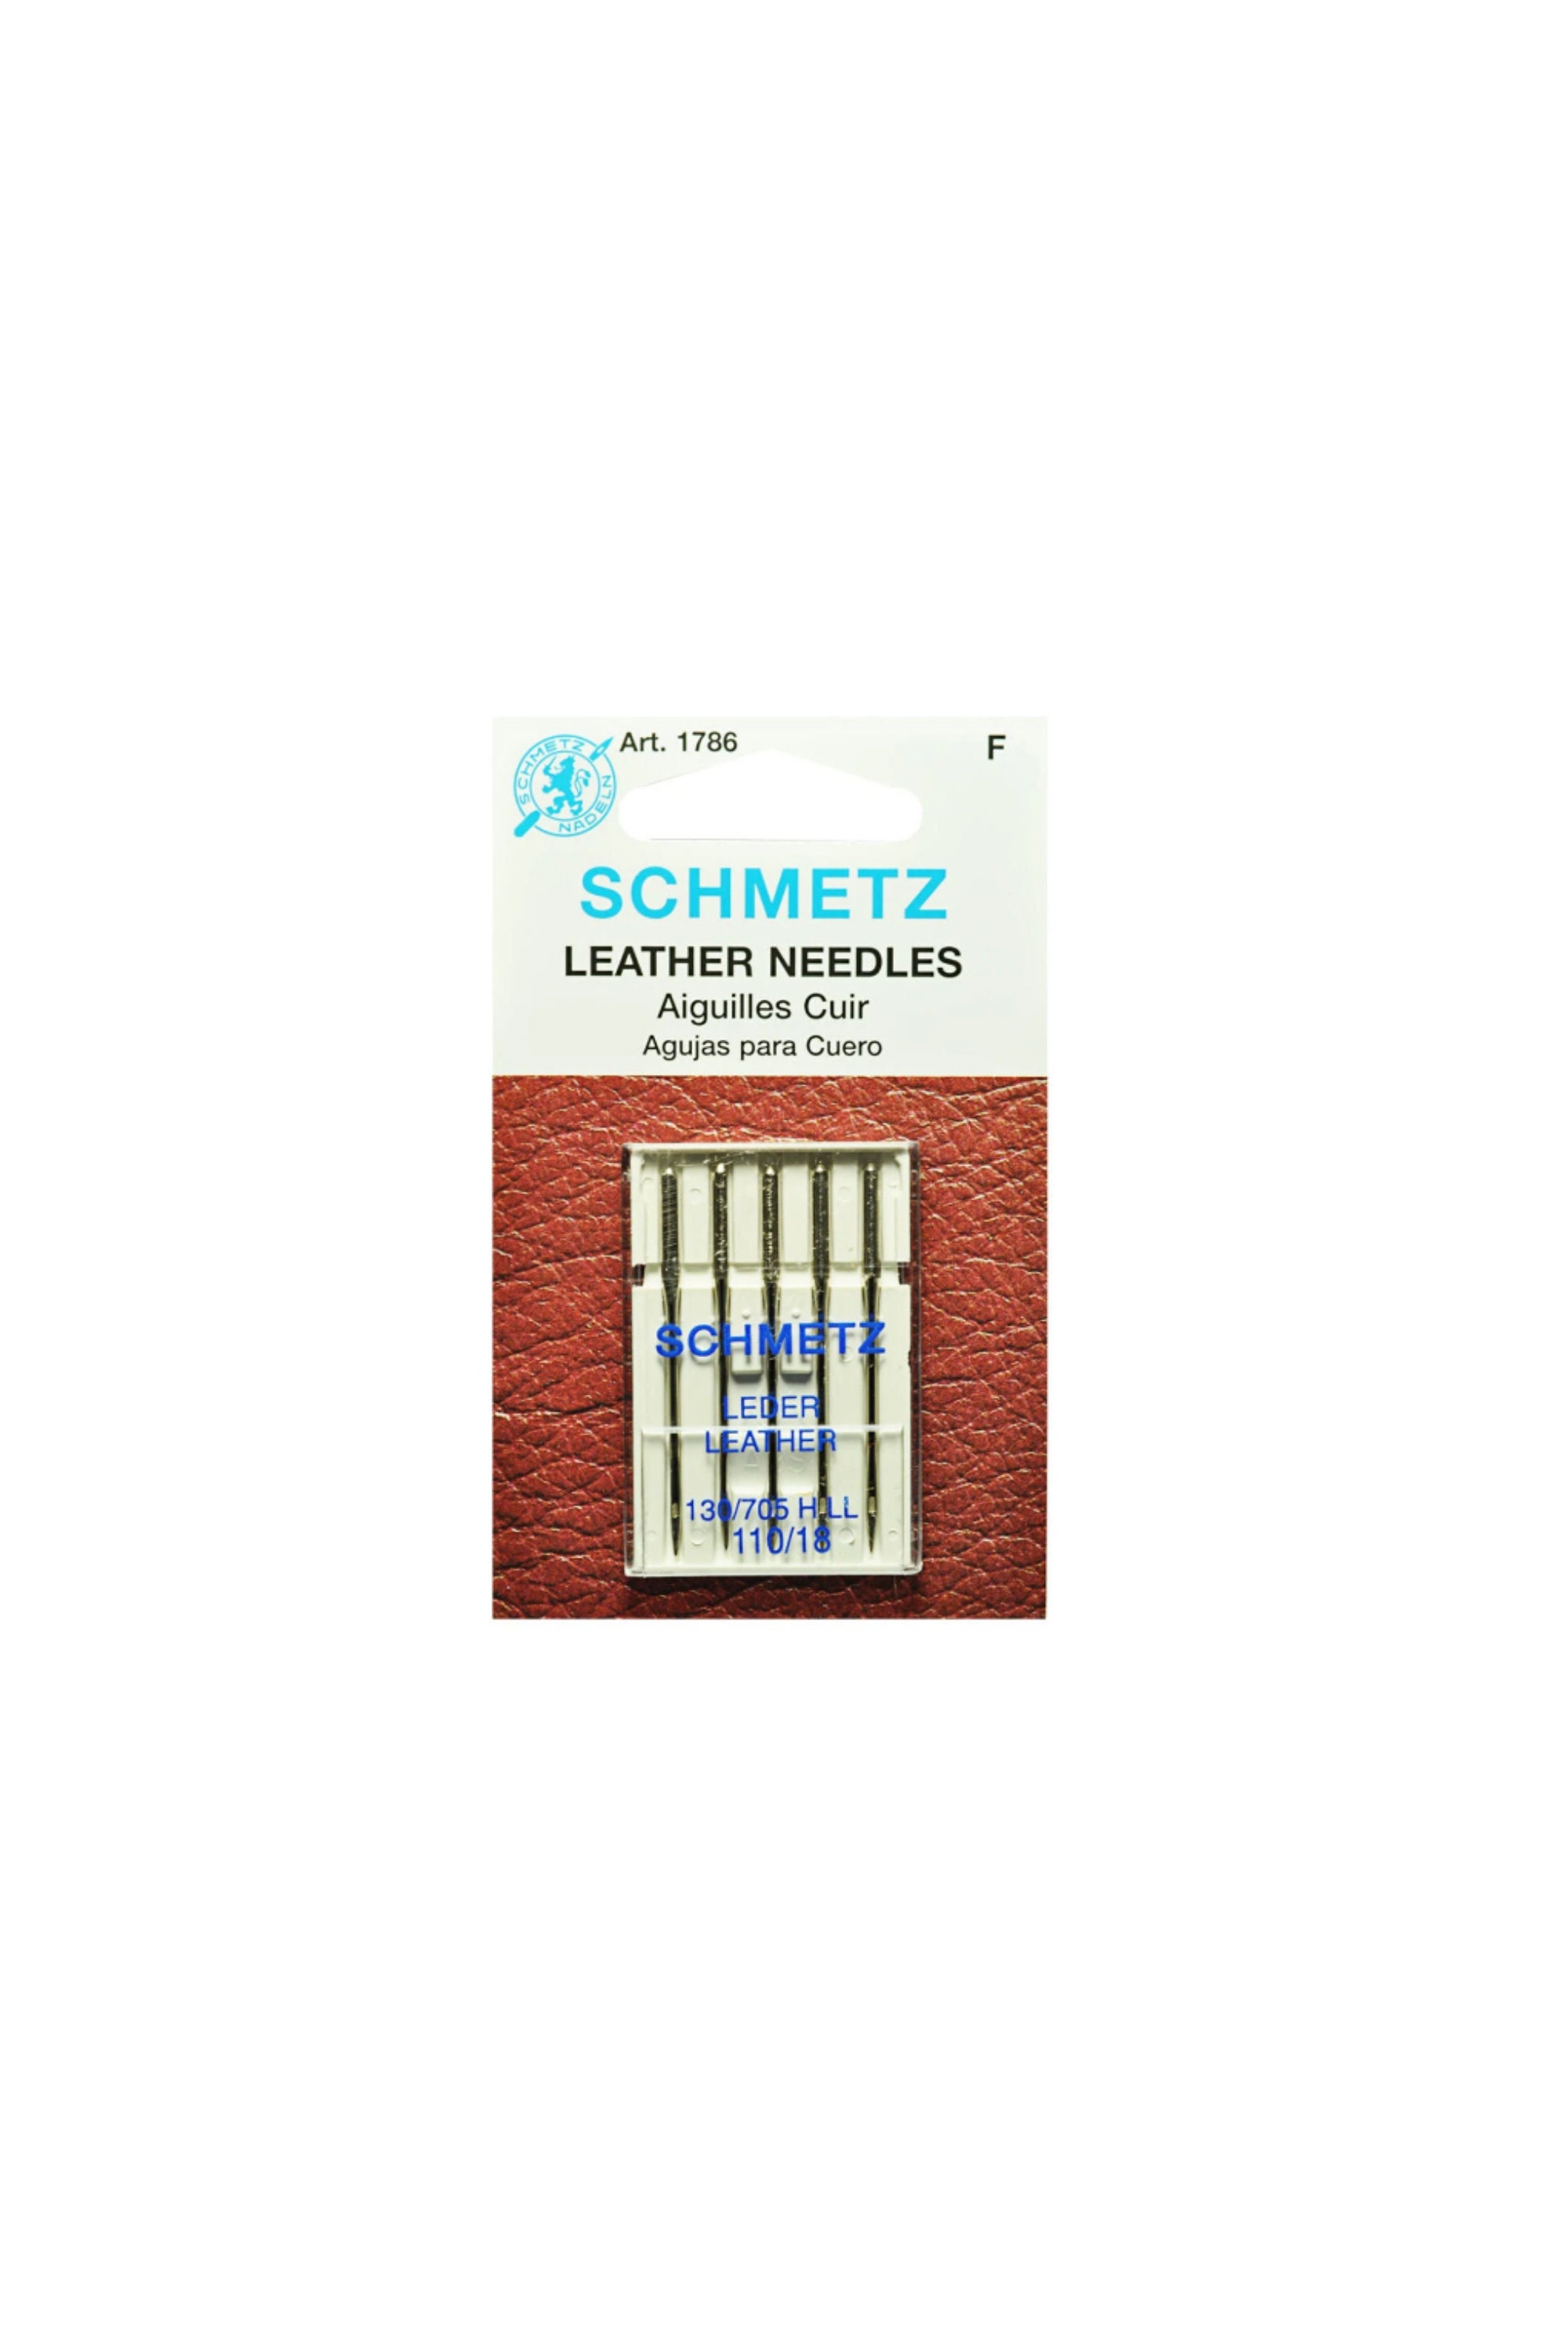 Schmetz 5pk Size 110/18 Leather Sewing Machine Needles 1786 130